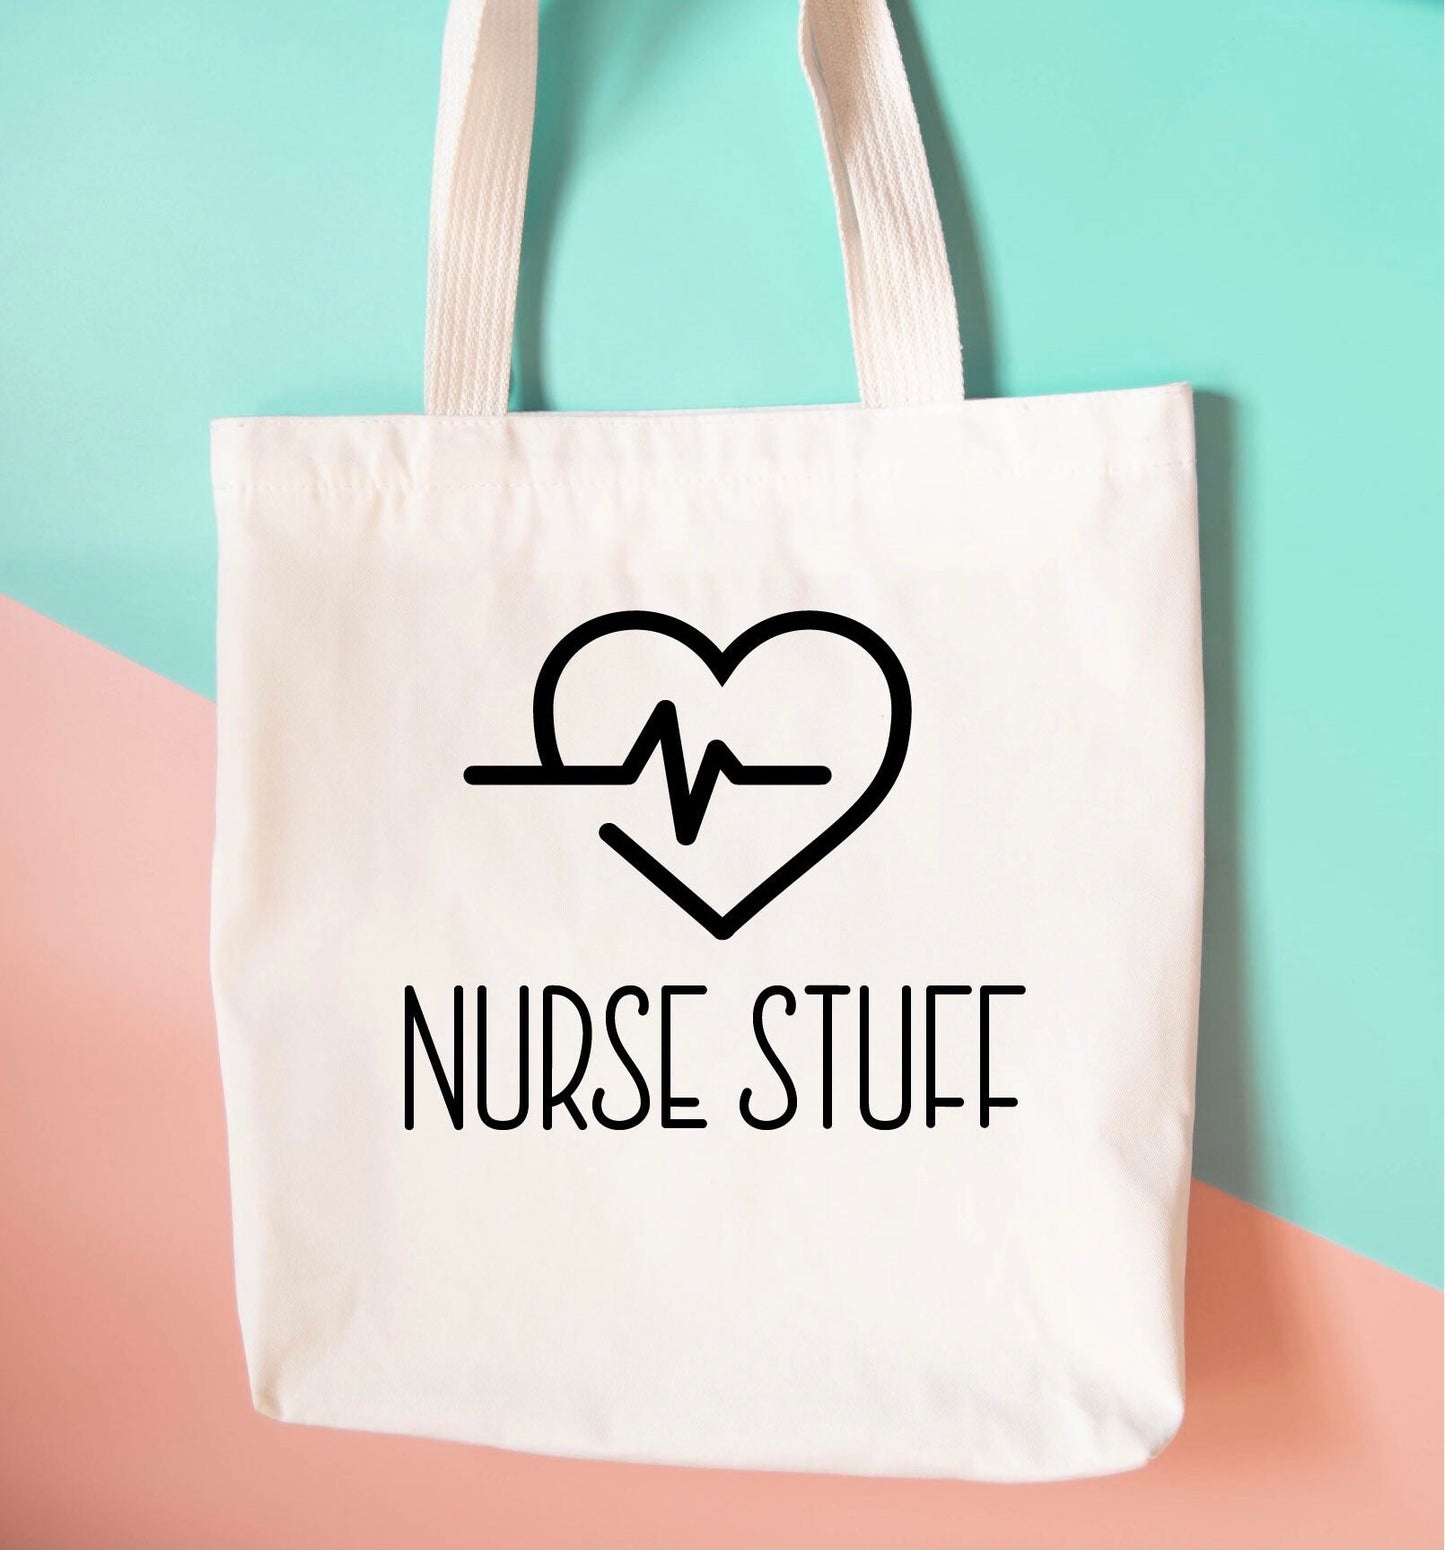 Nurse stuff tote Bag, cotton shopper bag, congrats first nursing job gift, nhs nurse gift, nurse colleague leaving gift